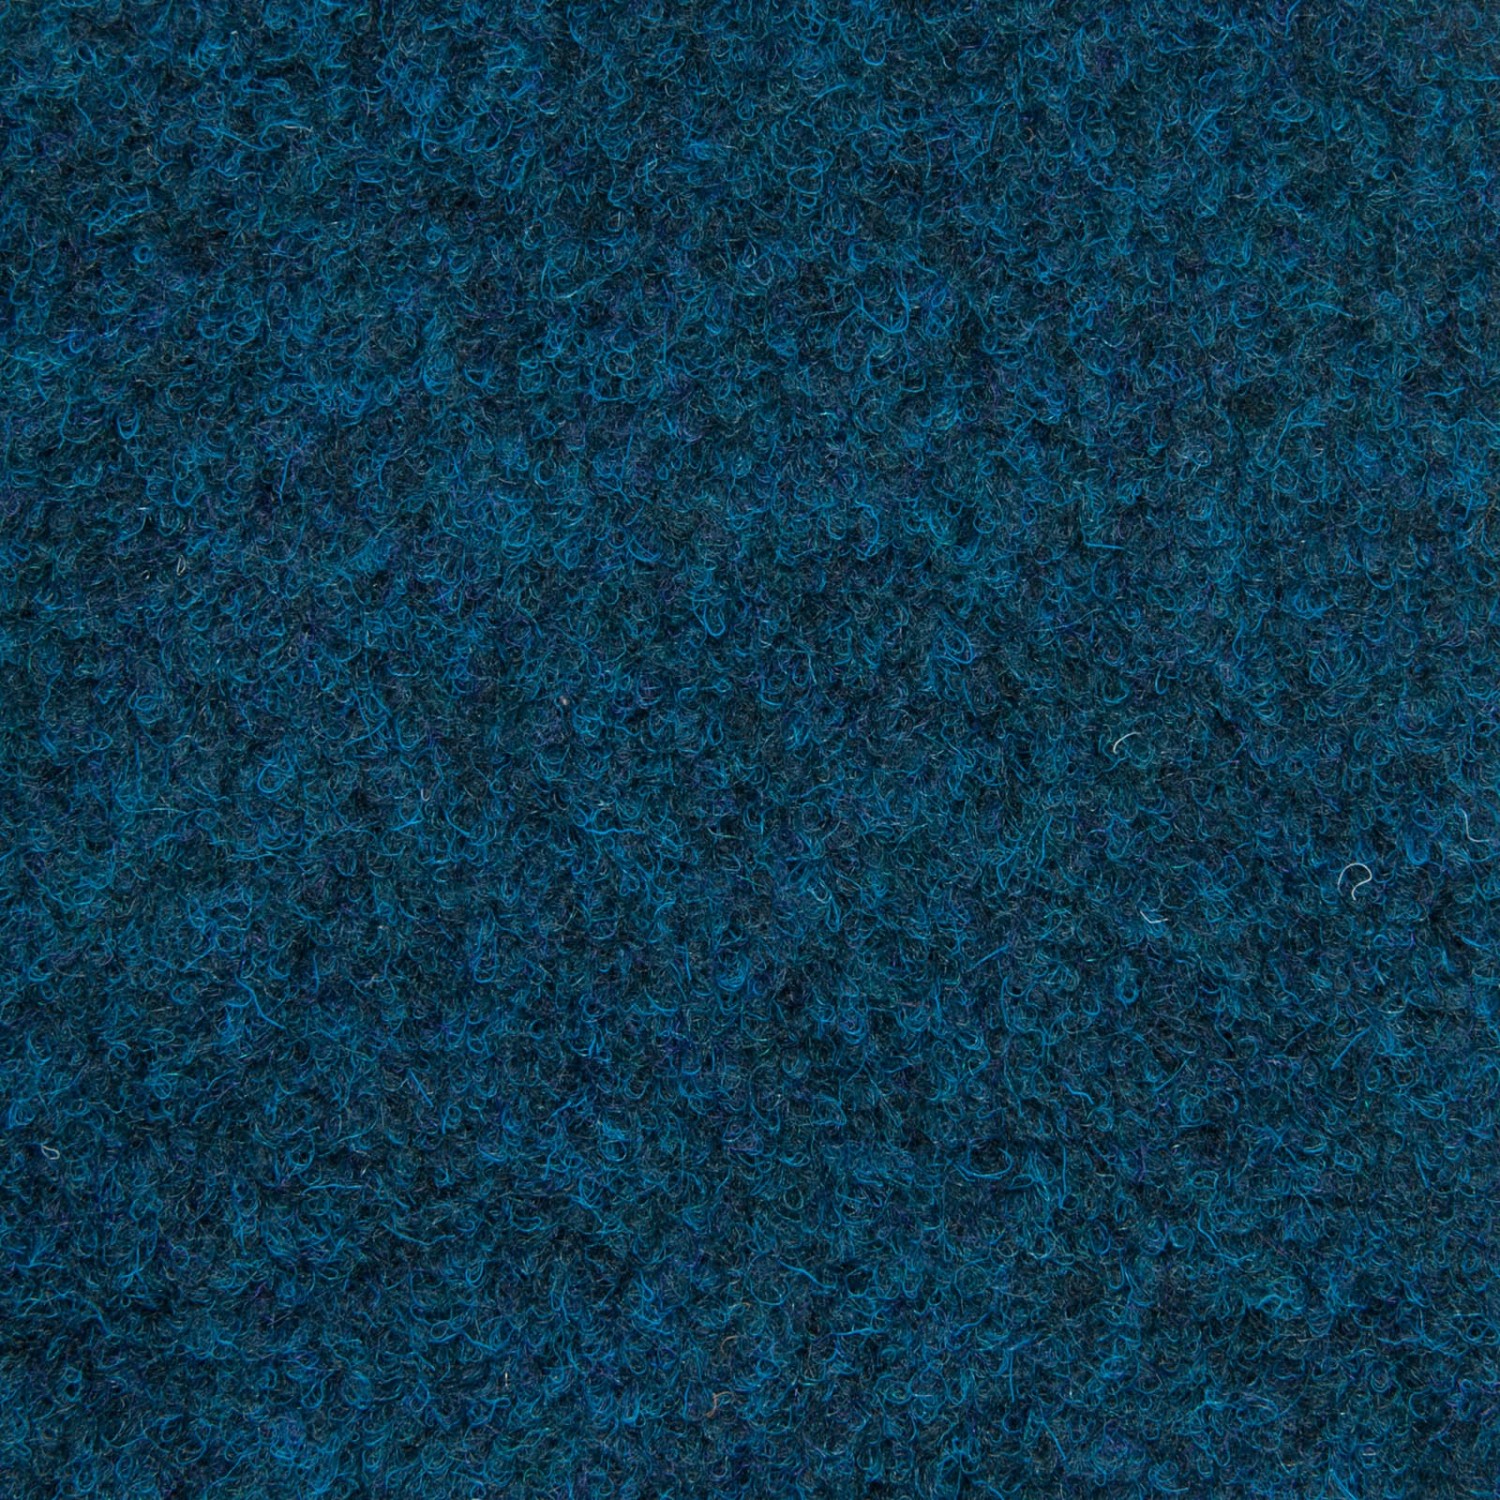 Schatex Teppichfliesen Aus Nadelfilz Selbstliegend Schatex Teppich Fliesen In 50x50 Cm Nadelvlies Teppichboden Als Flies